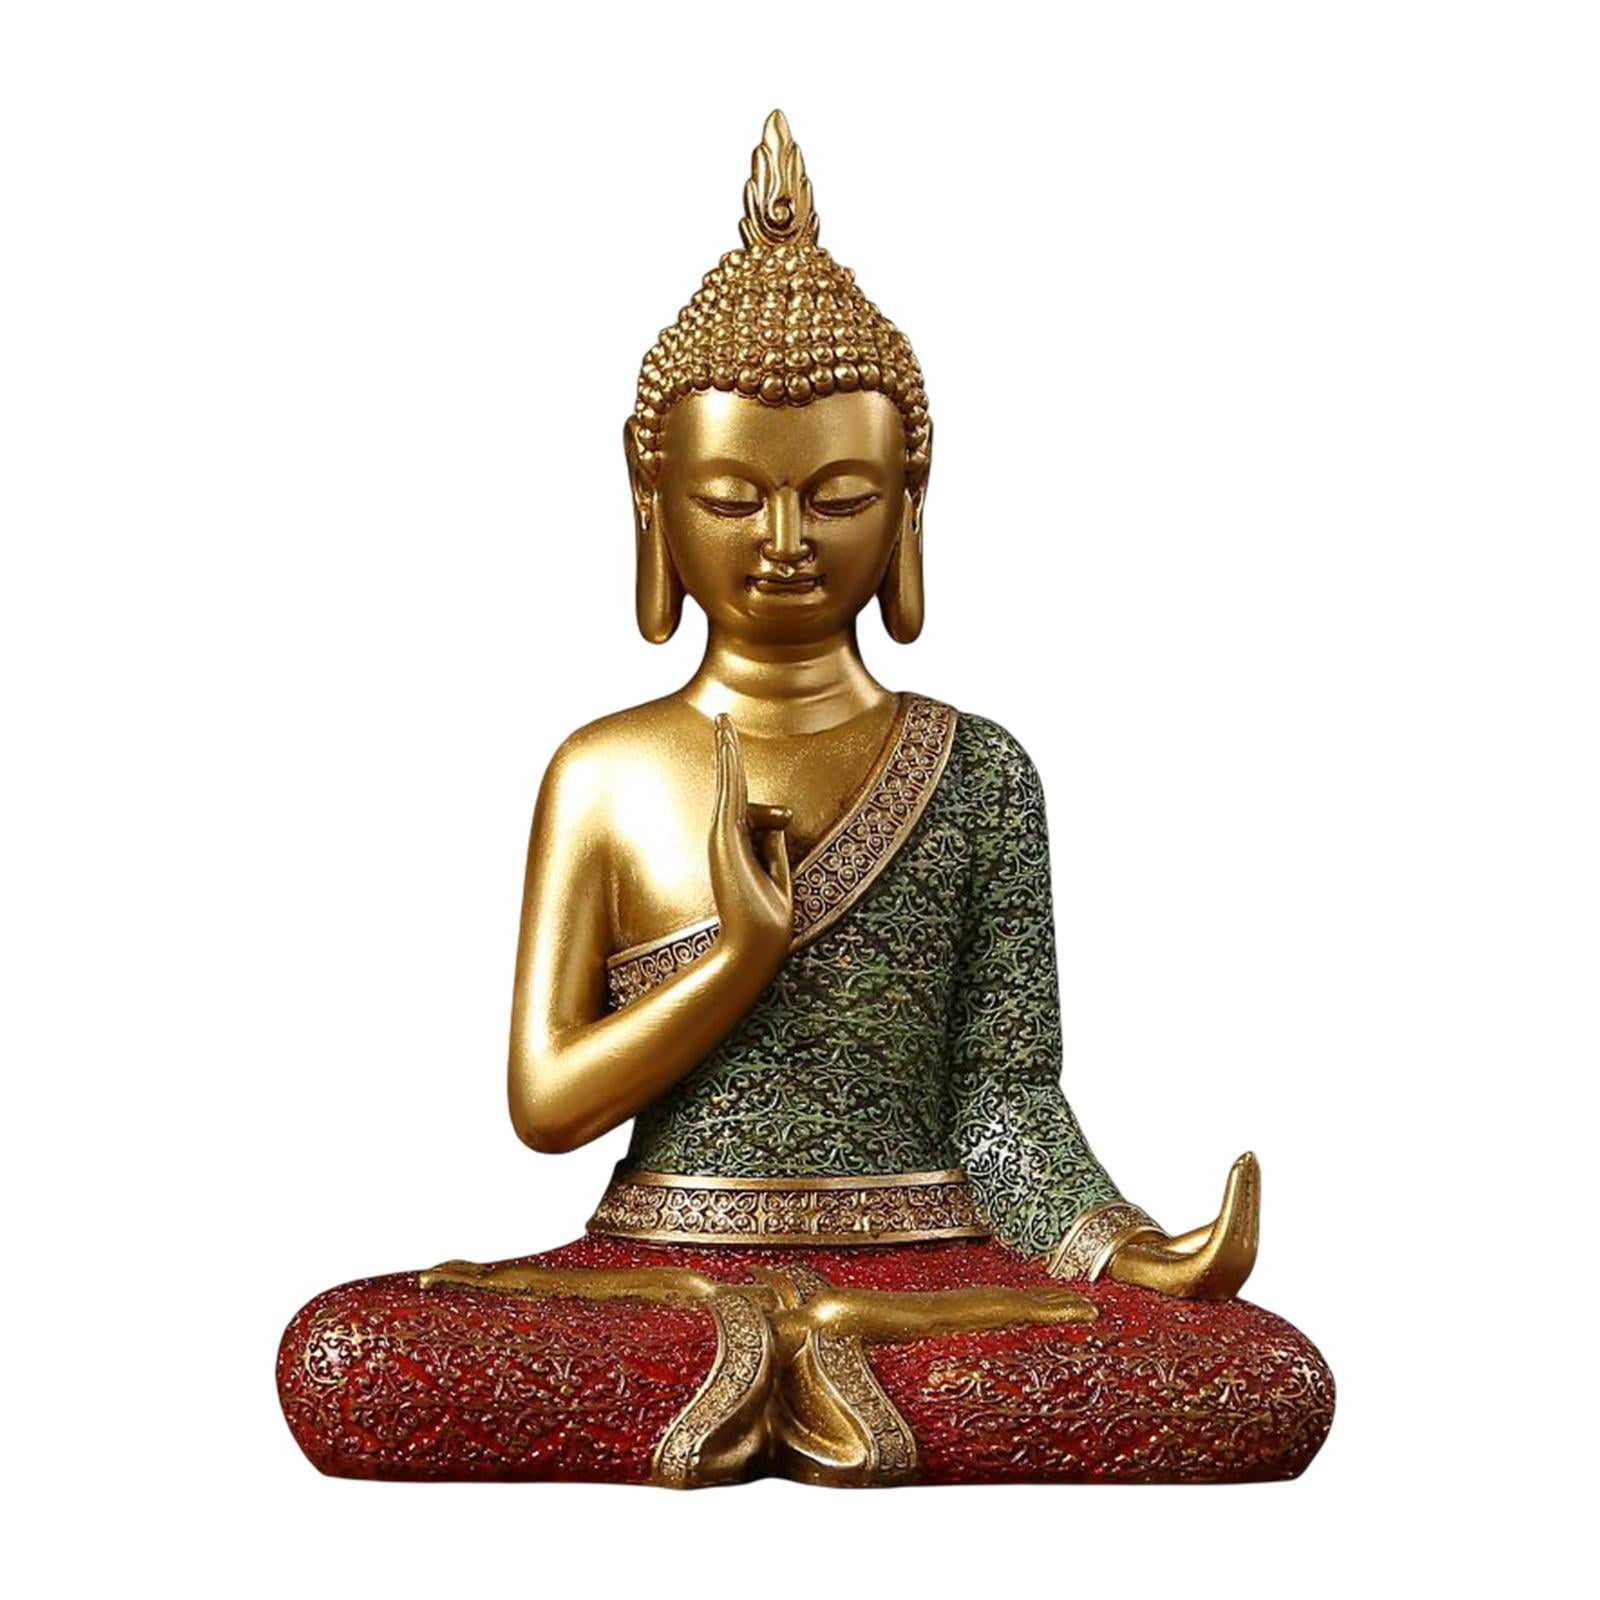 Sakyamuni Buddha Statue Meditation Home Decor Religious Sculpture ...